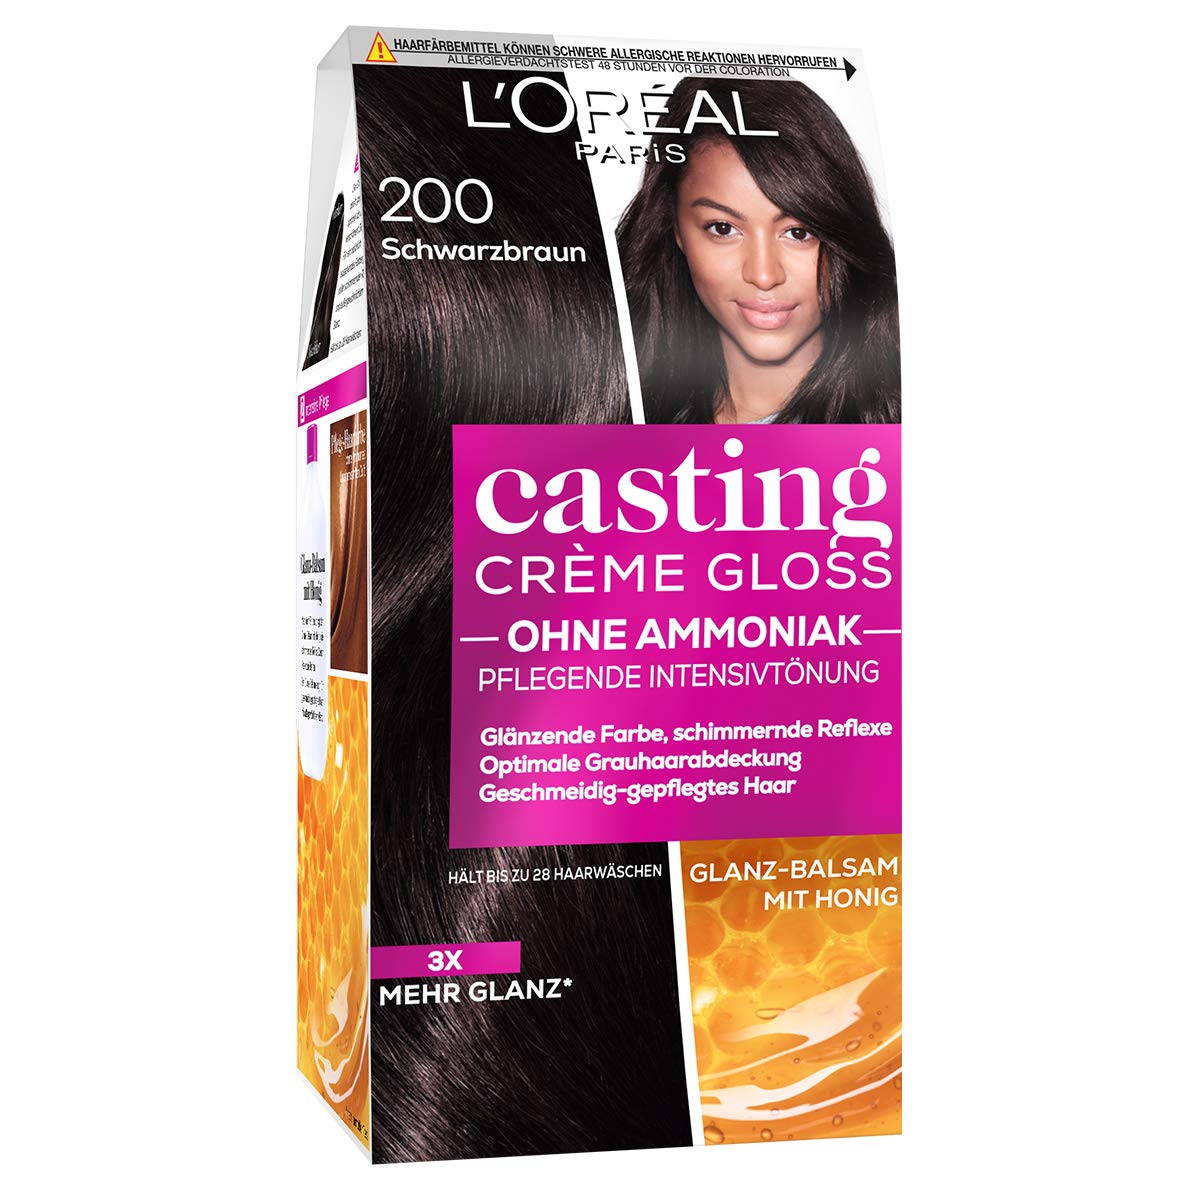 L'Oréal Paris L\'Oréal Paris Casting Crème Gloss Hair Colour, Ammonia-Free and Silicone-Free Nourishing Intensive Hair Colour with Crème Gloss, No. 200 Black-Brown (Brown), Pack of 1, brown ‎200 black